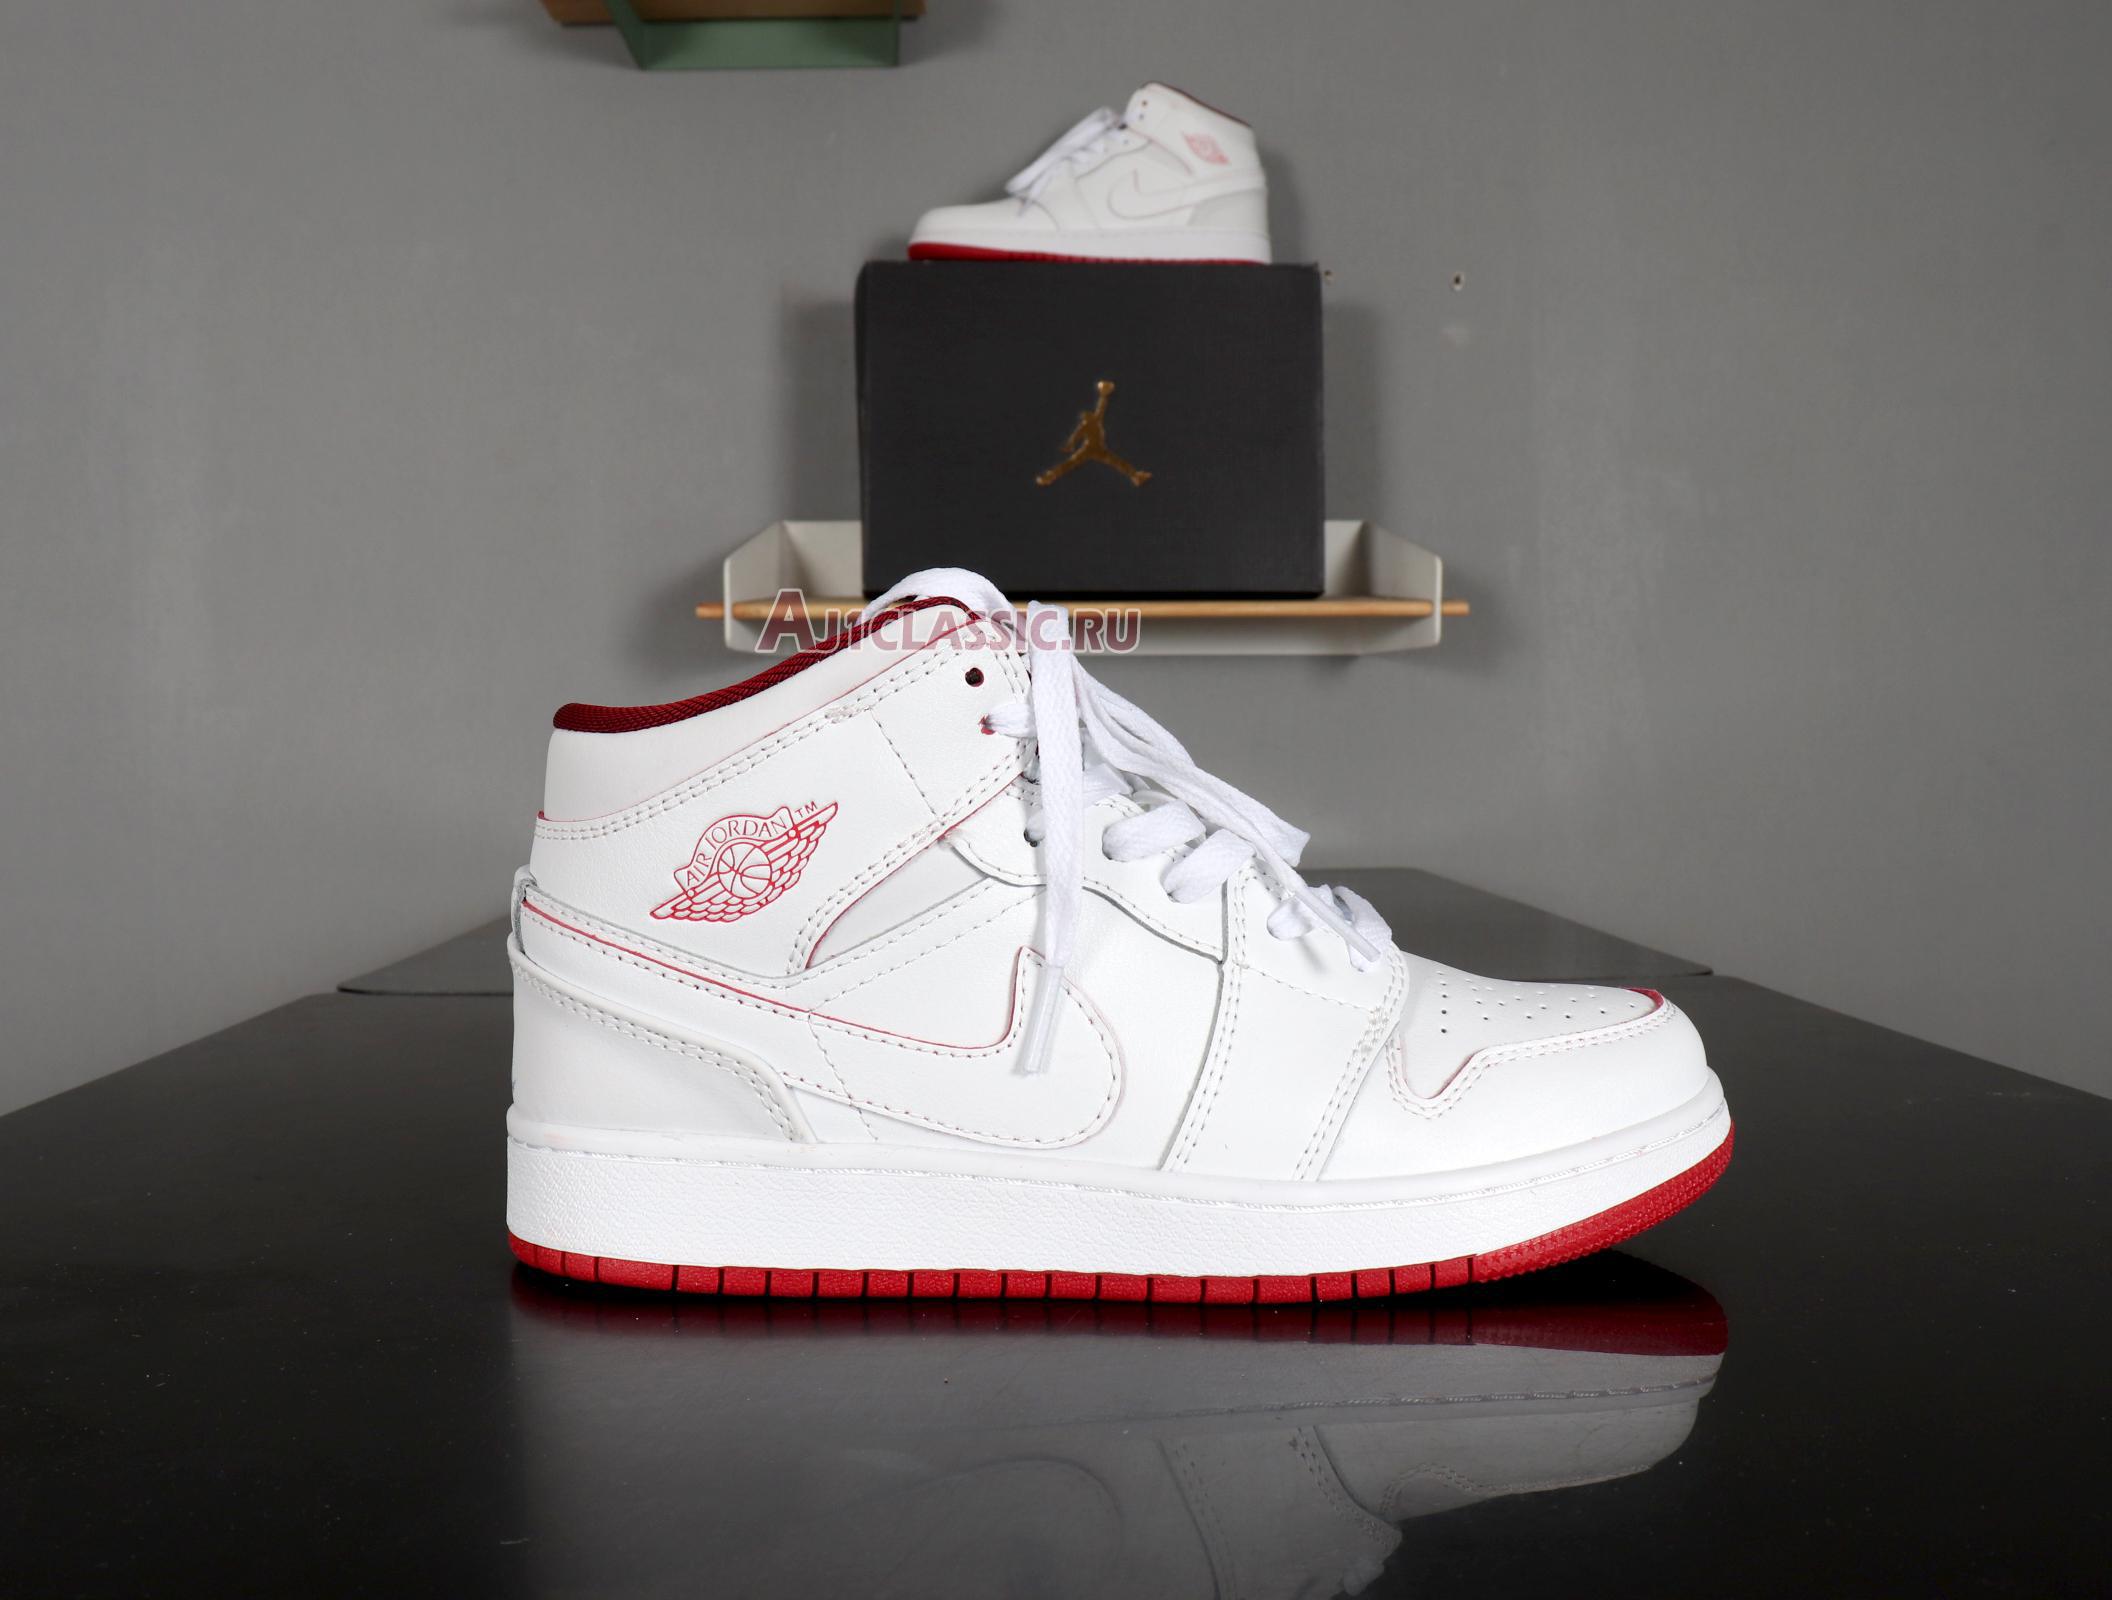 Air Jordan 1 Retro Mid White Gym Red 554725-103 White/Gym Red-Black Sneakers